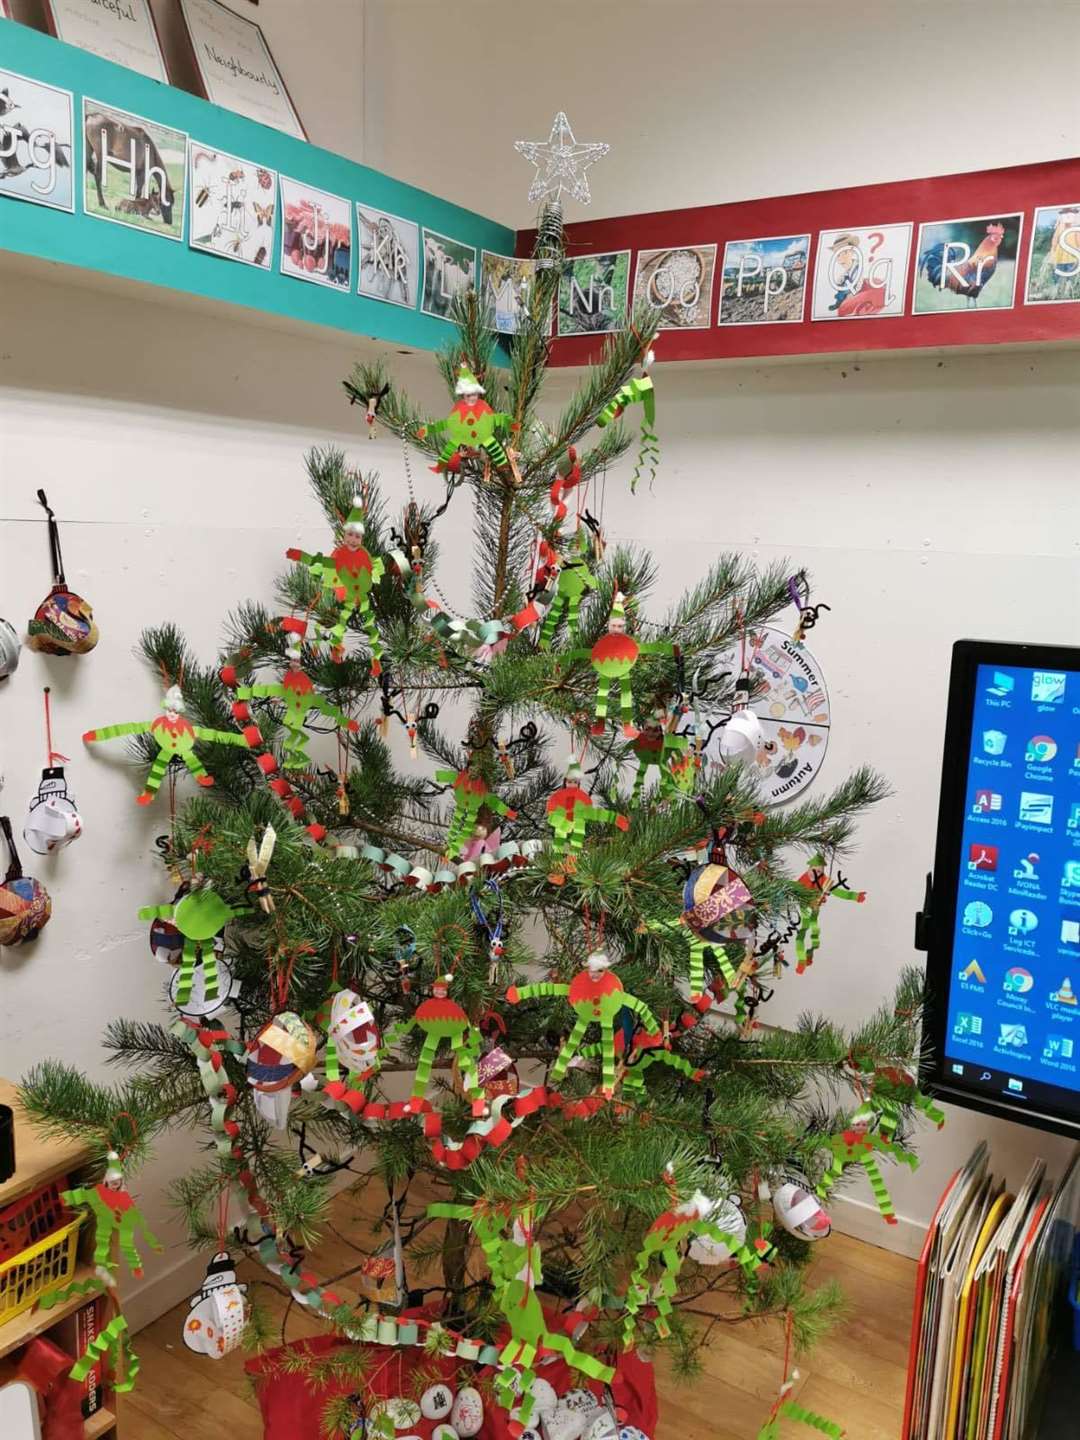 The school Christmas crafts tree.